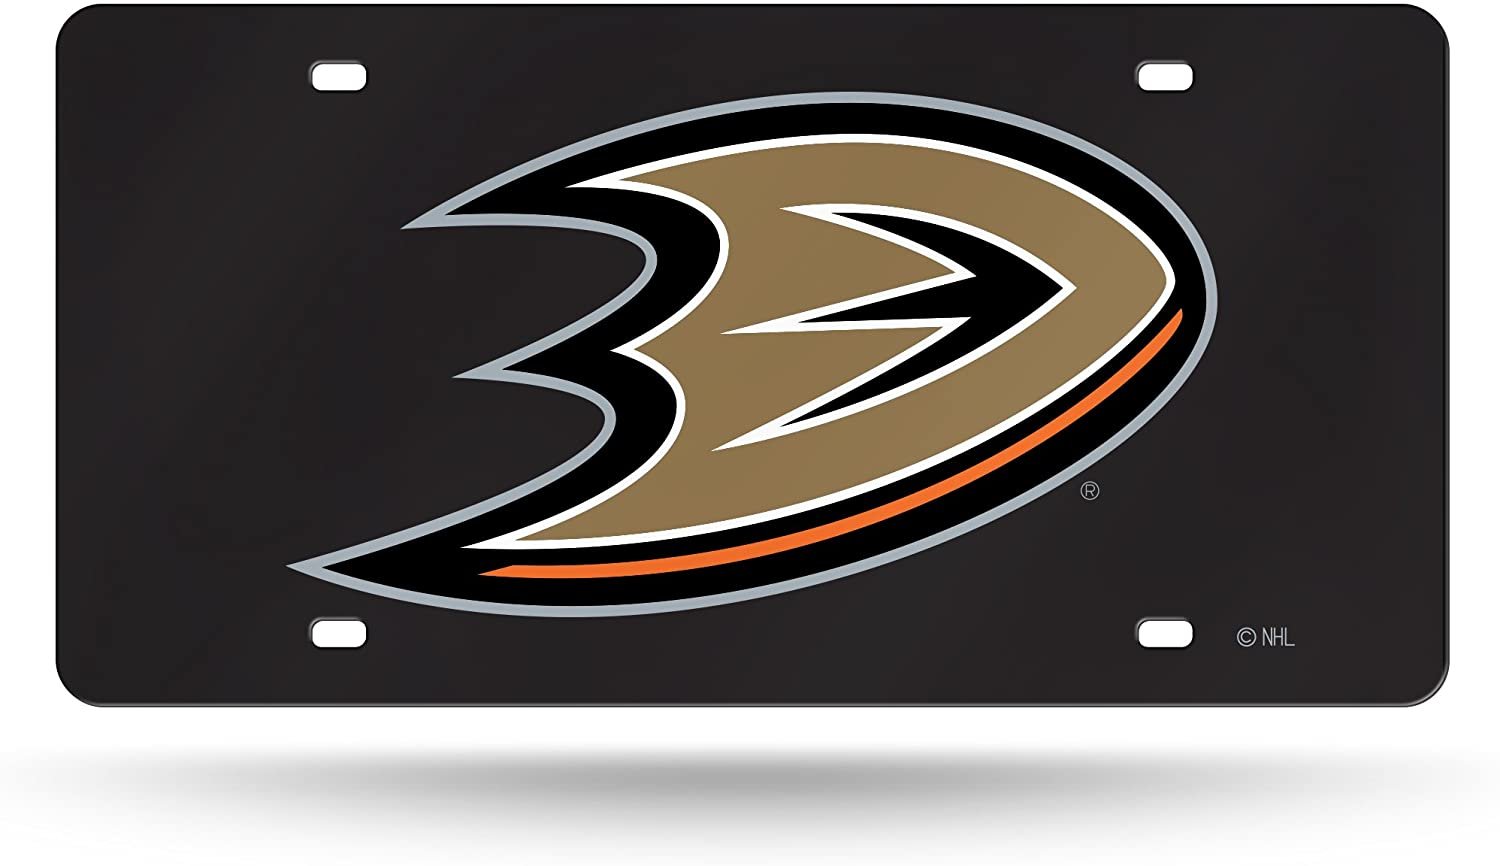 Anaheim Ducks Premium Laser Cut Tag License Plate, Black Mirrored Acrylic Inlaid, 12x6 Inch